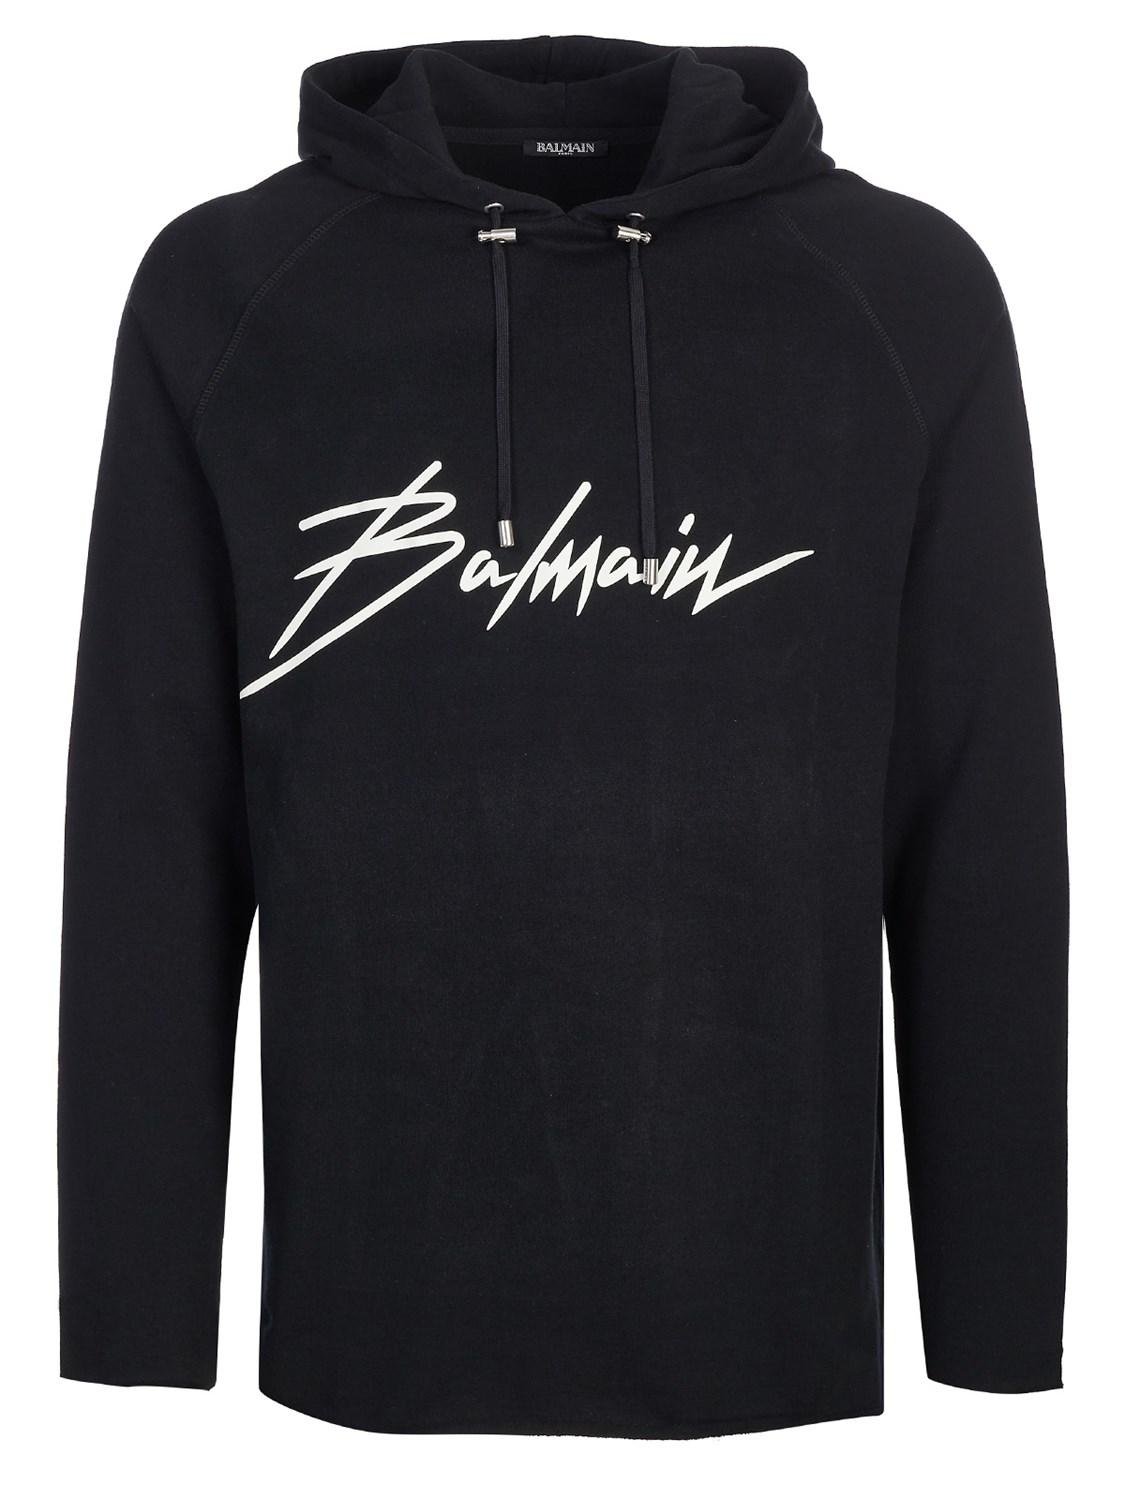 Balmain Pullover Black Sh13239 I137 in Black for Men - Lyst